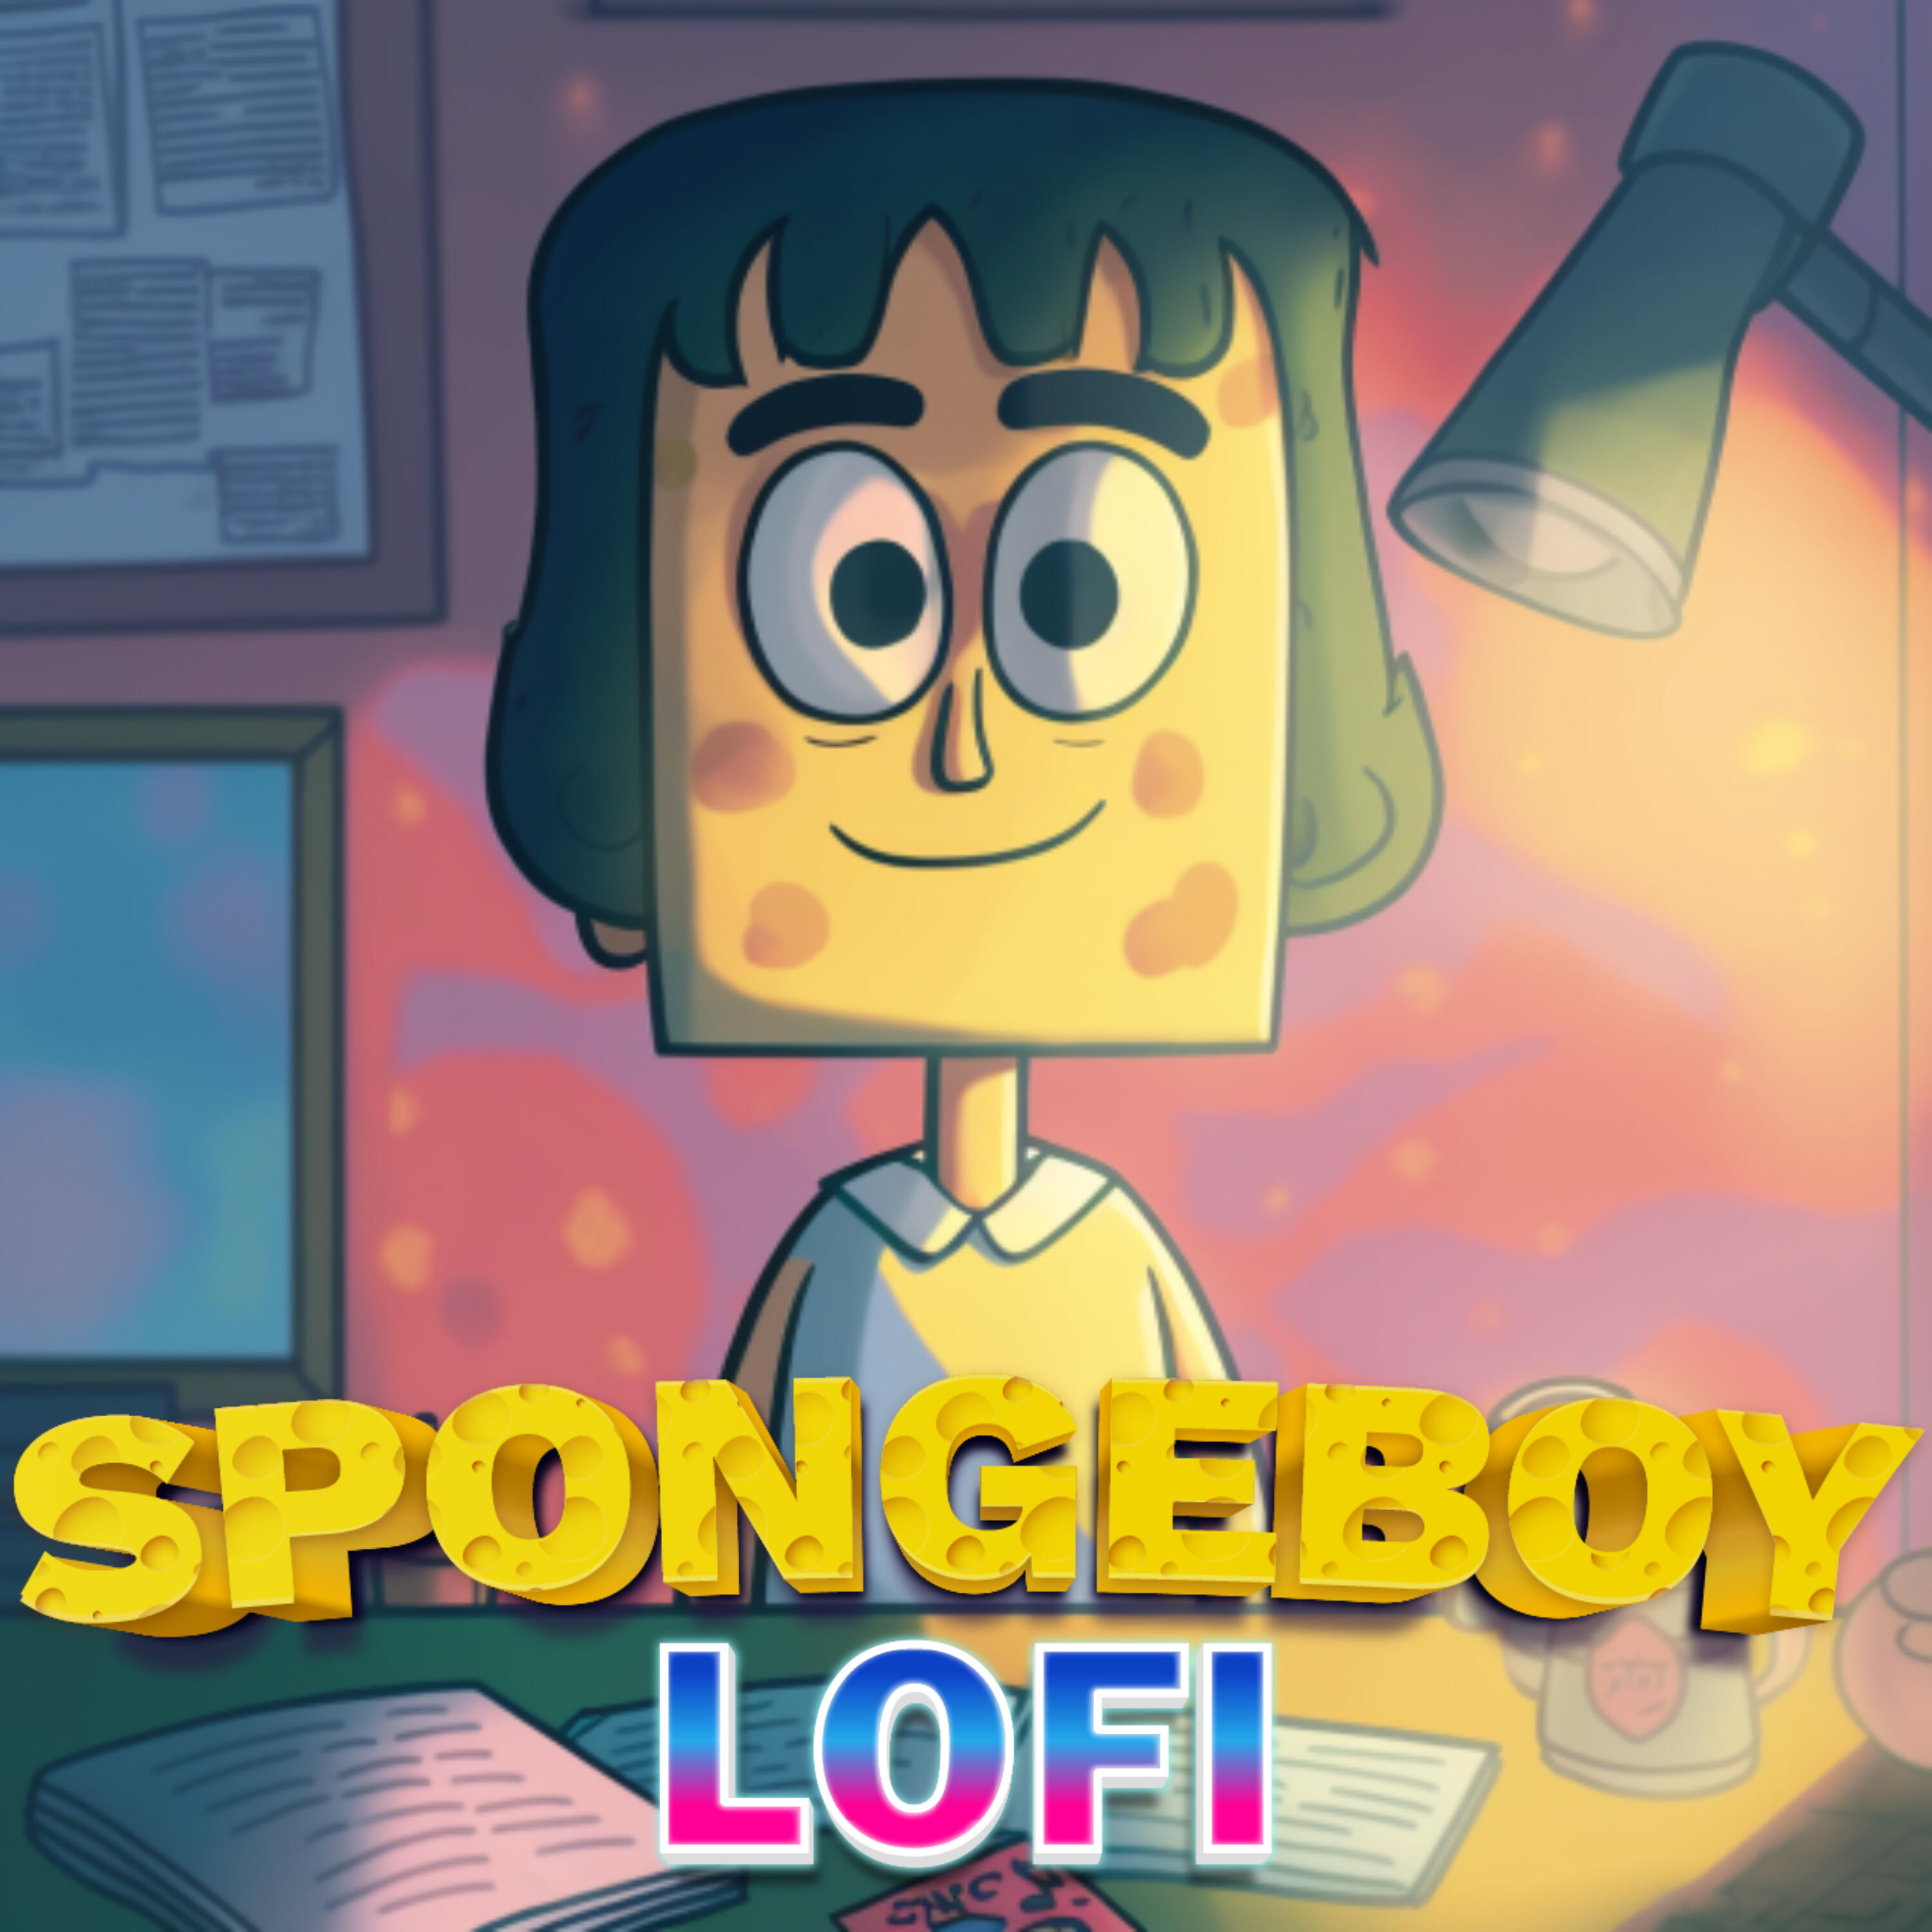 Stream SUBSCRIBE MY !!! // The Sad Song - Spongebob Squarepants (  lofi hip hop mix - relaxing music ) by Arya Wedhatama